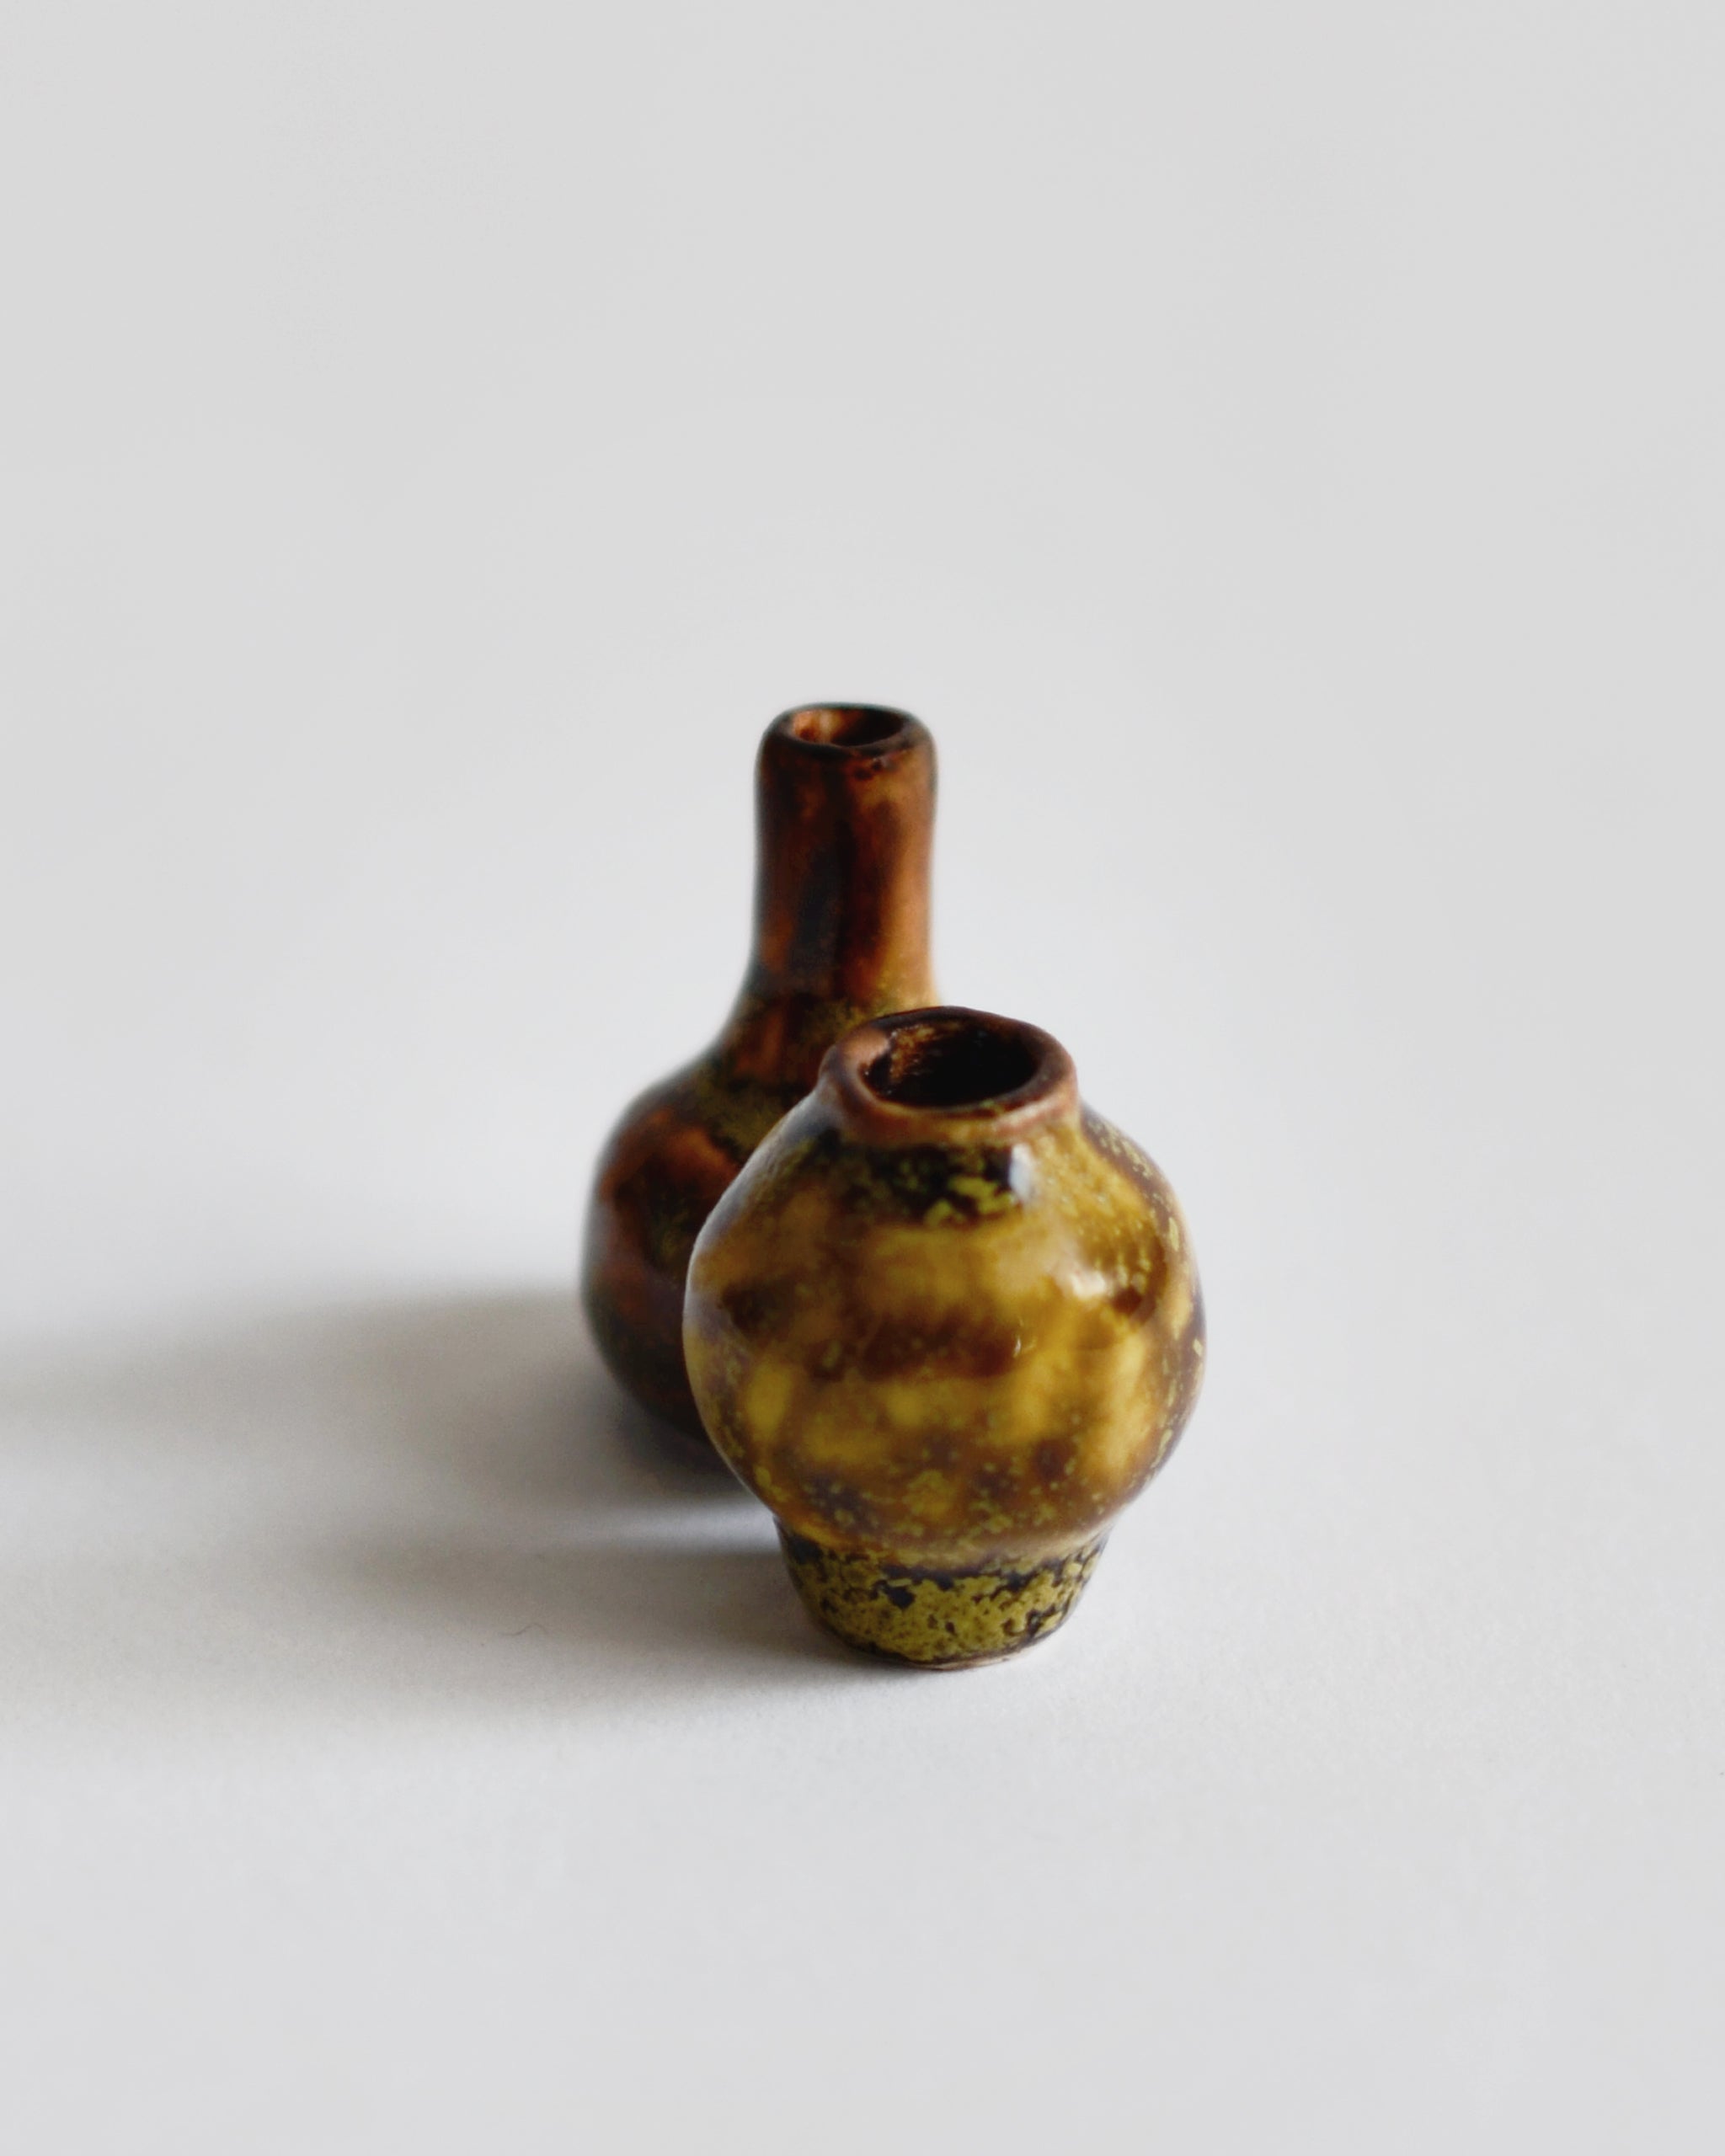 Image of 2 brown glazed mini vases close together from the Mini Vase Set -Duo II by Dani Sujin x Nalata Nalata against white-gray background.